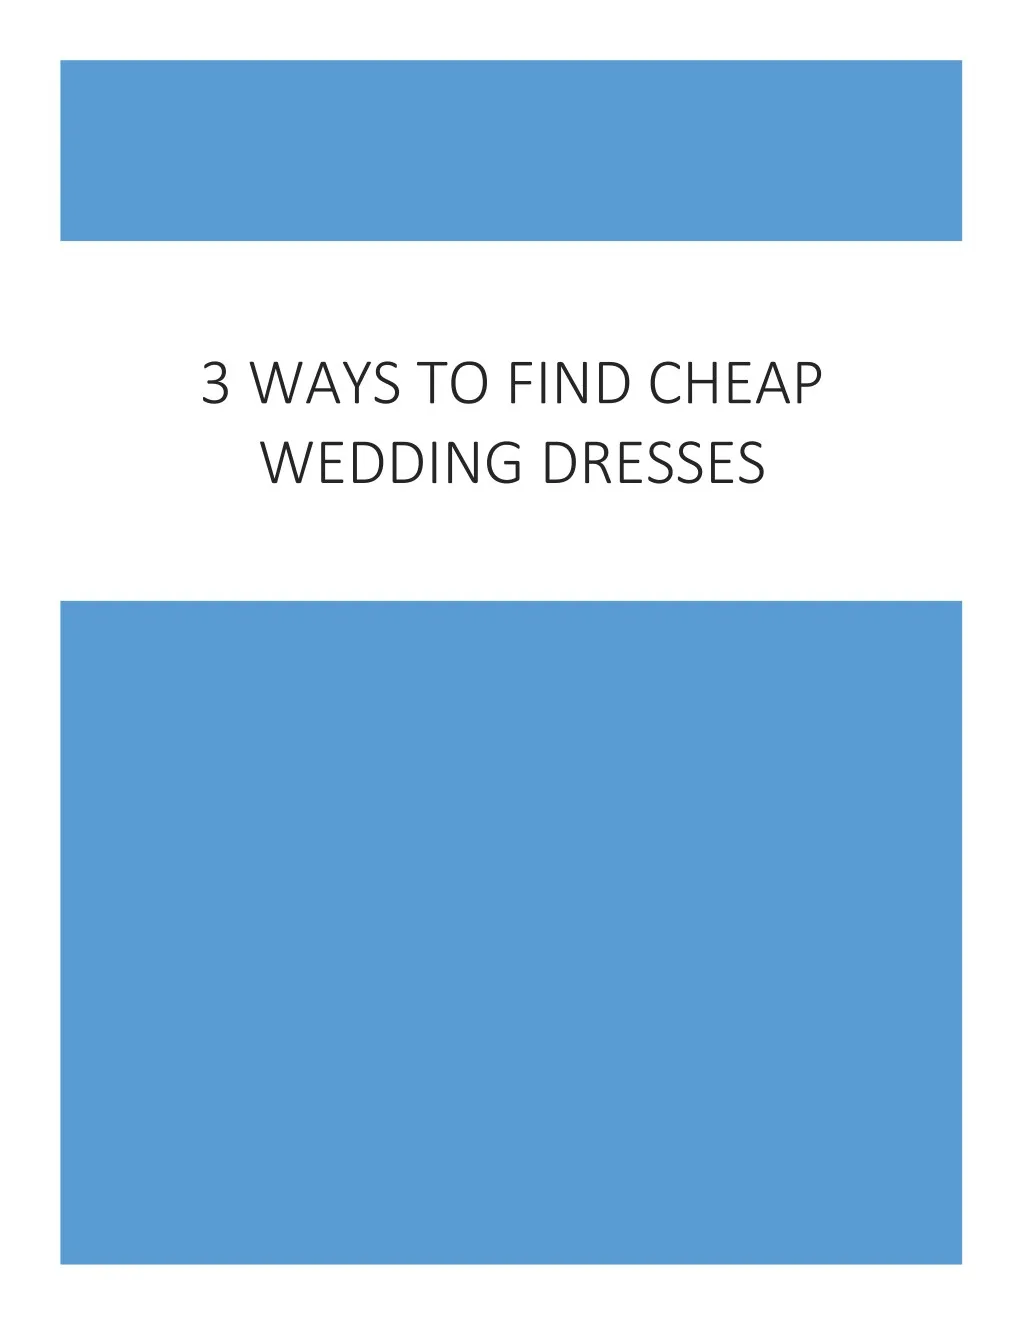 3 ways to find cheap wedding dresses